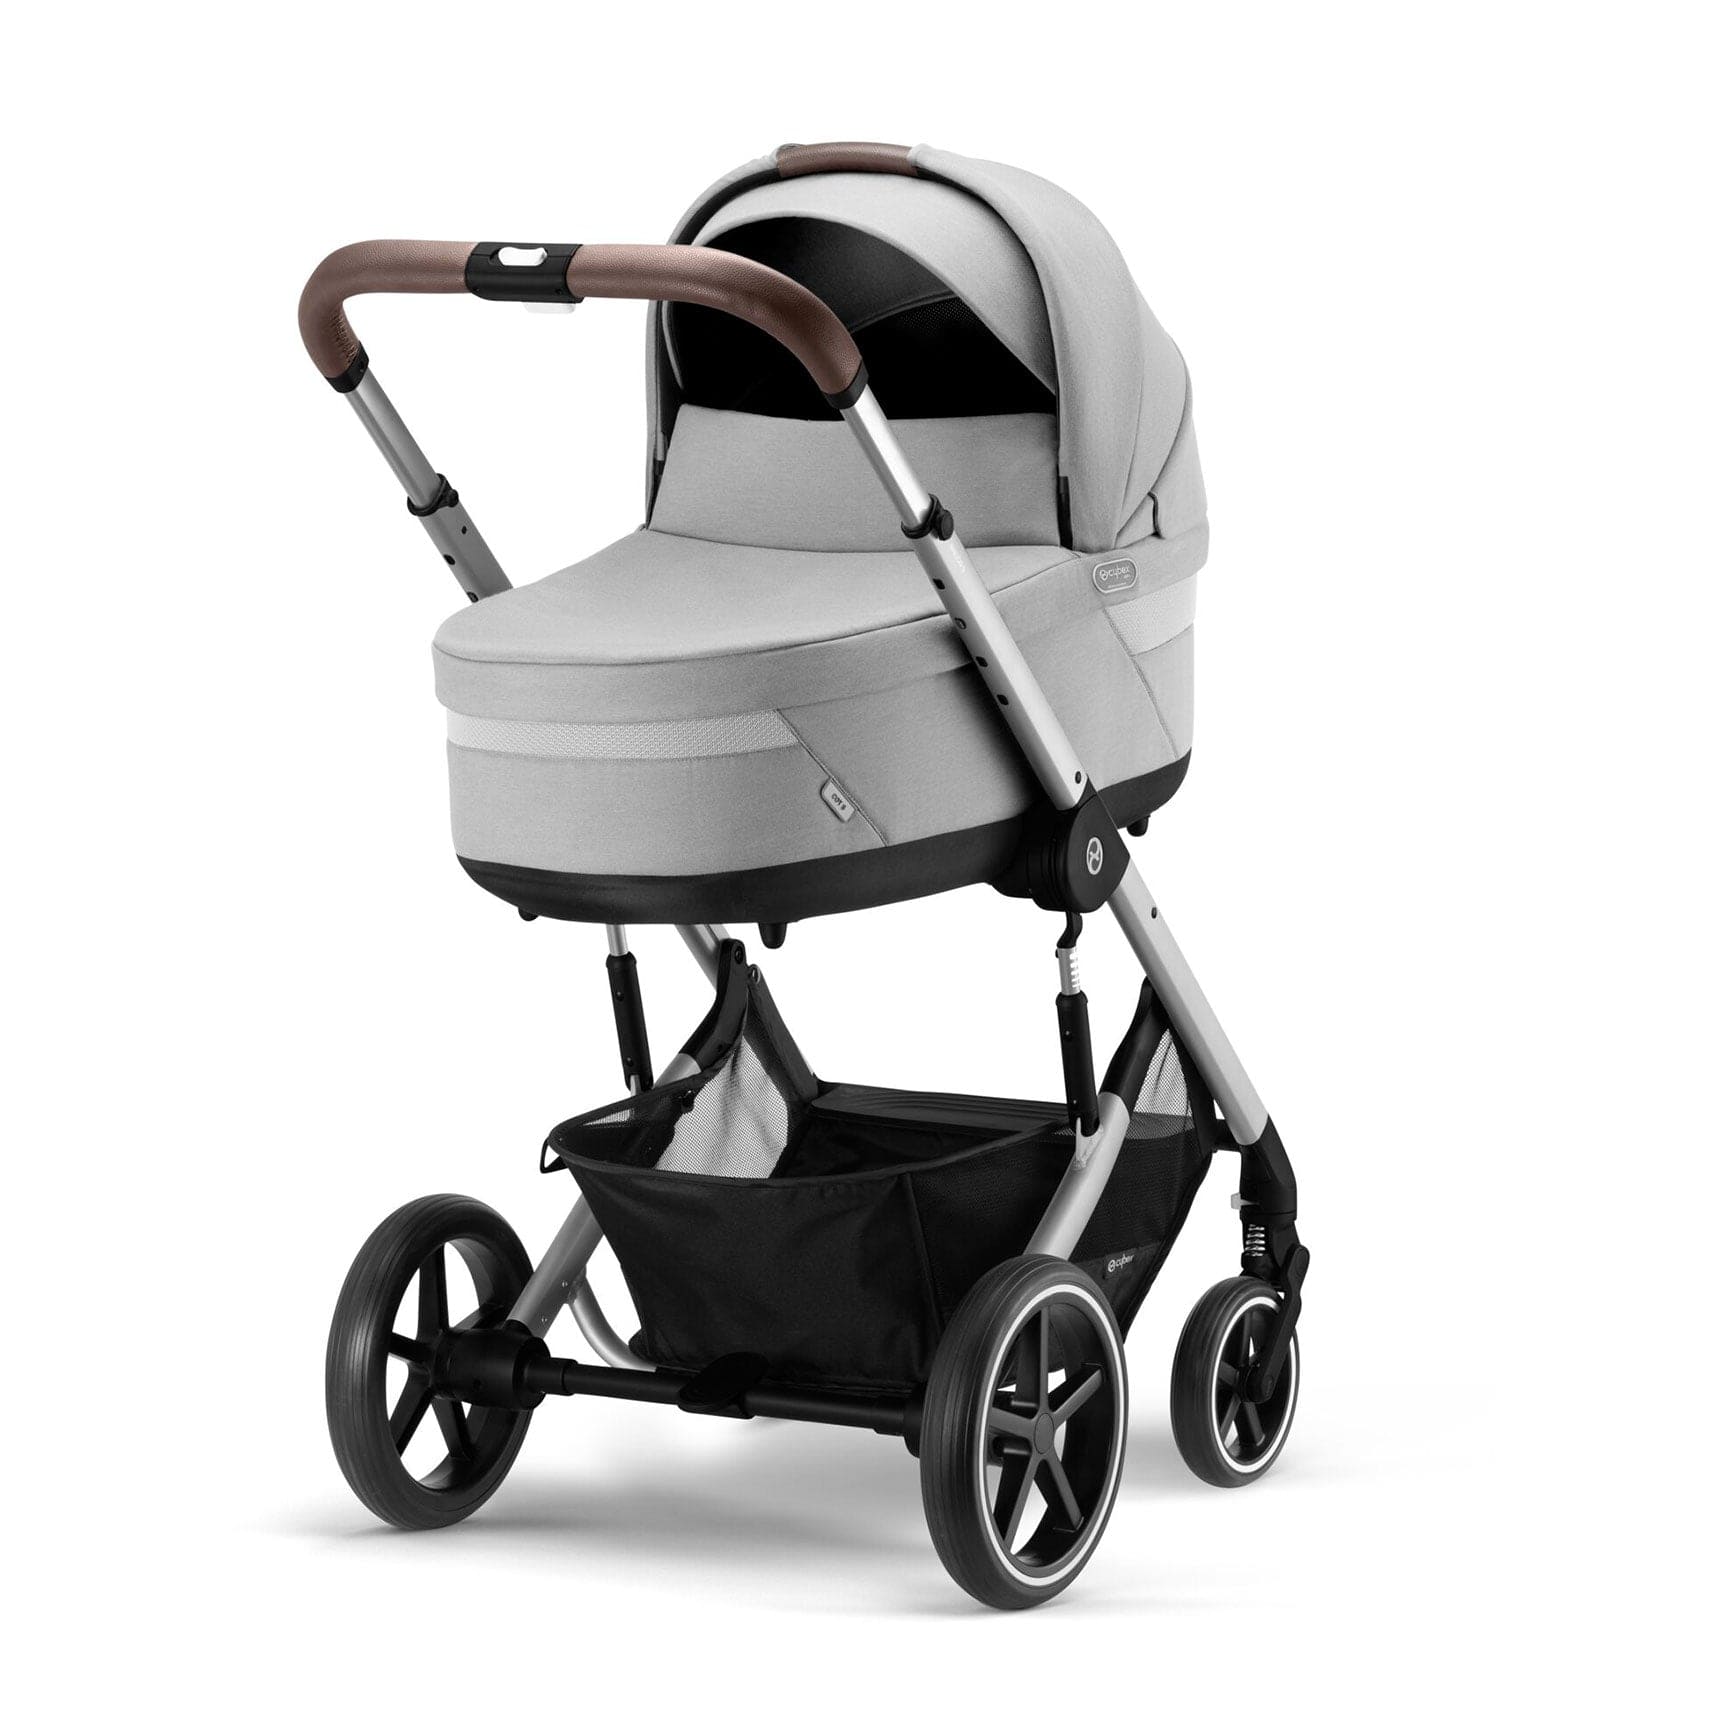 Cybex Baby Strollers Cybex Balios S Lux Essential Bundle - Silver/Lava Grey 12751-SLV-LAV-GRY